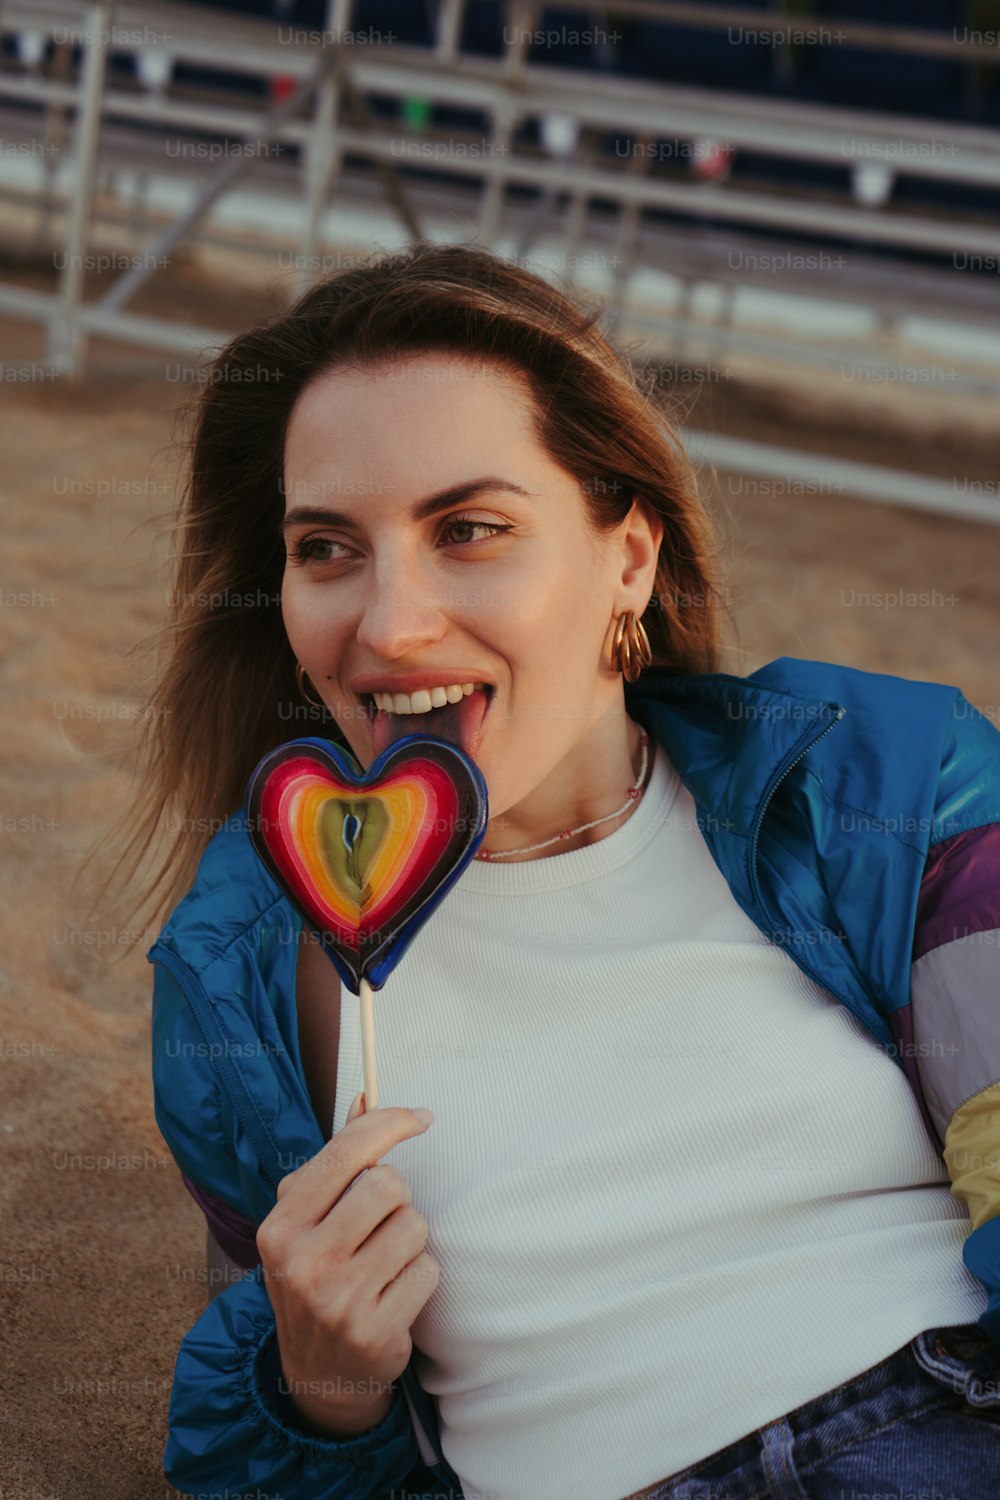 a woman is holding a heart shaped lollipop